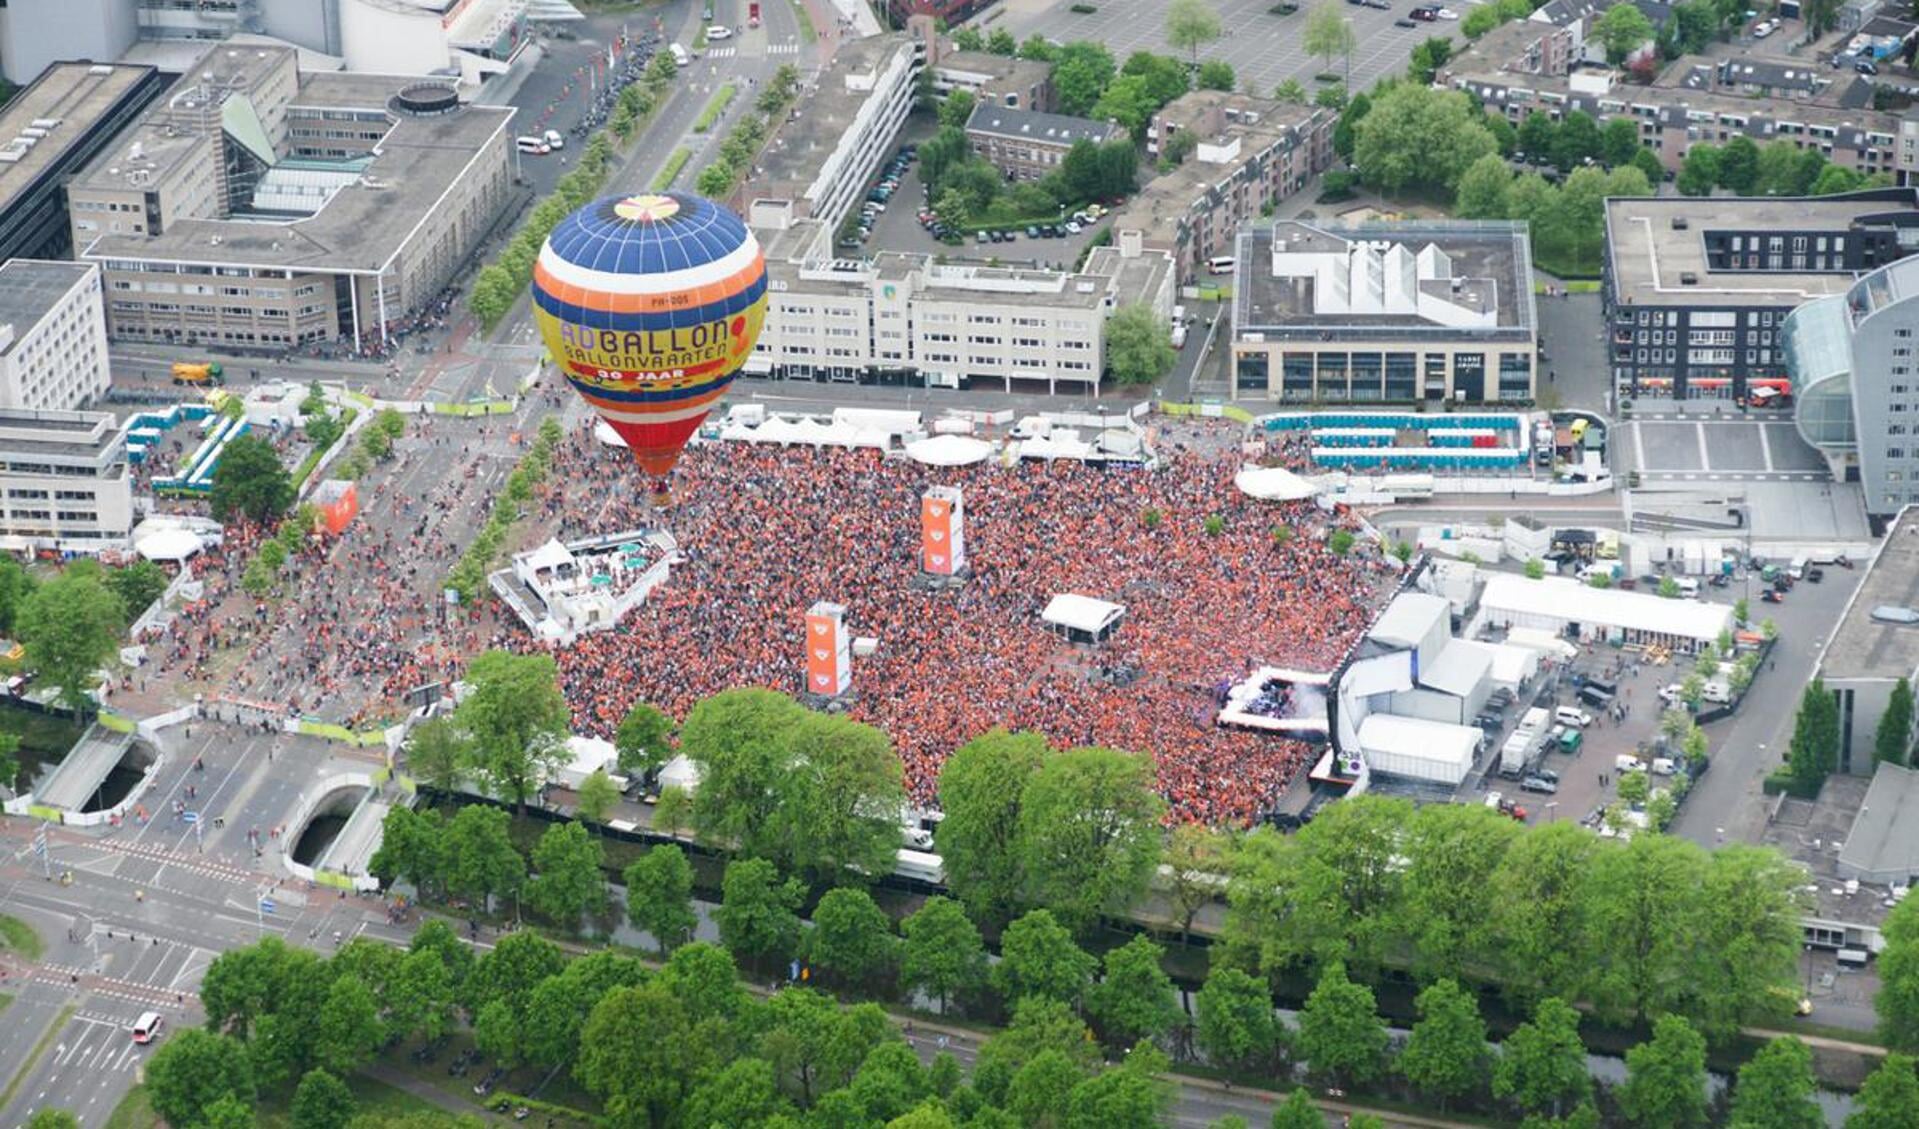 538Koningsdag 2014 uit de lucht. foto Ad Ballon